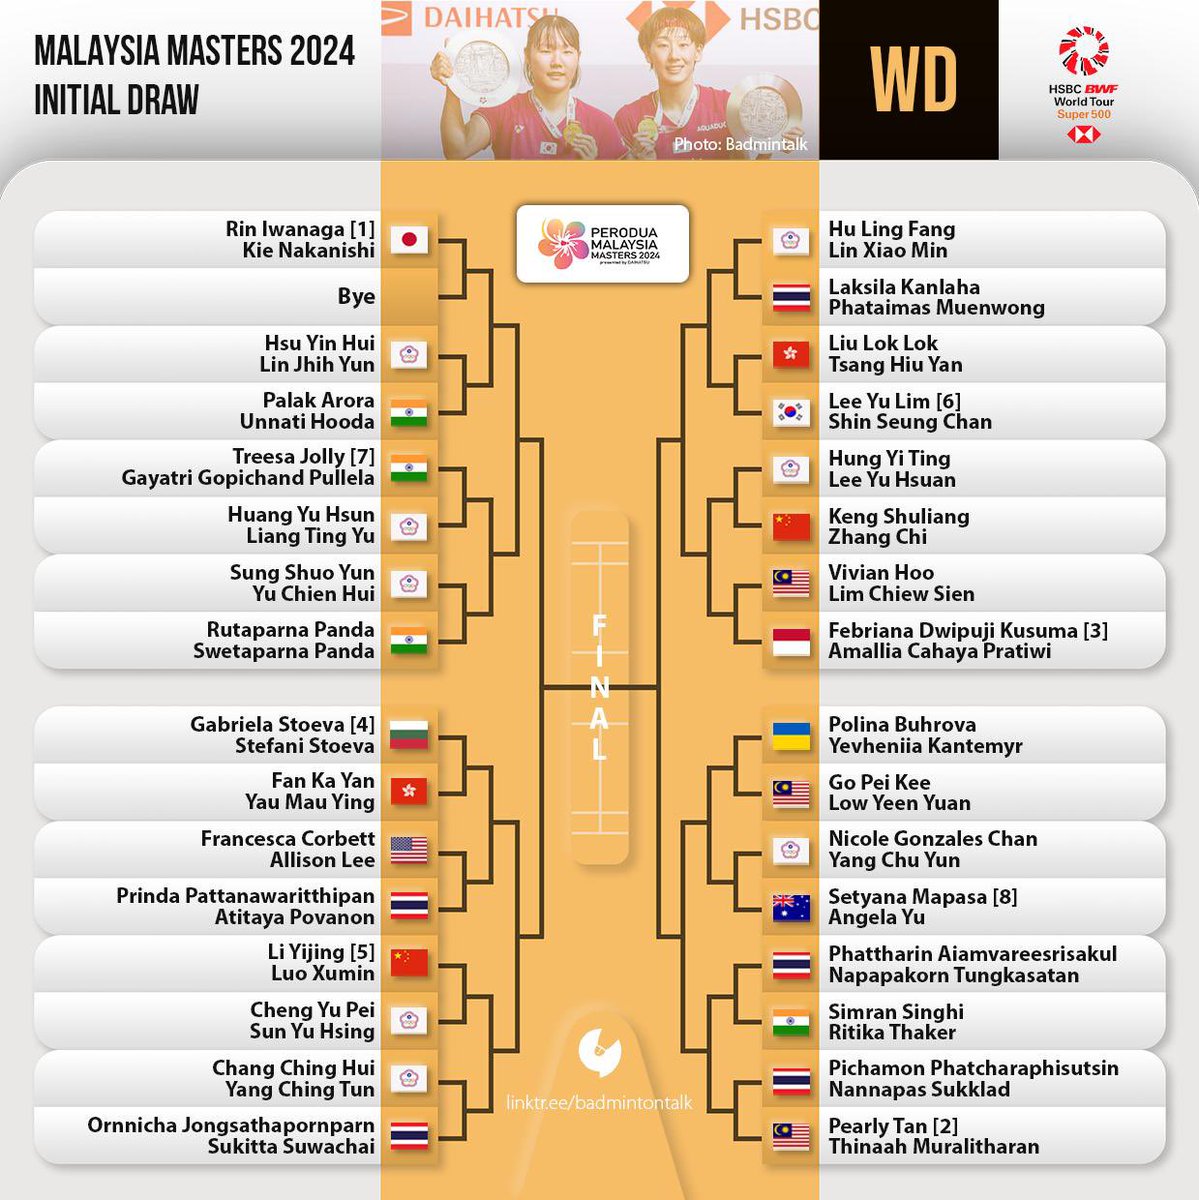 Women's Doubles Draw - #MalaysiaMasters2024 Bottom half: Febriana Dwipuji Kusuma/Amallia Cahaya Pratiwi vs Vivian Hoo/Lim Chiew Sien